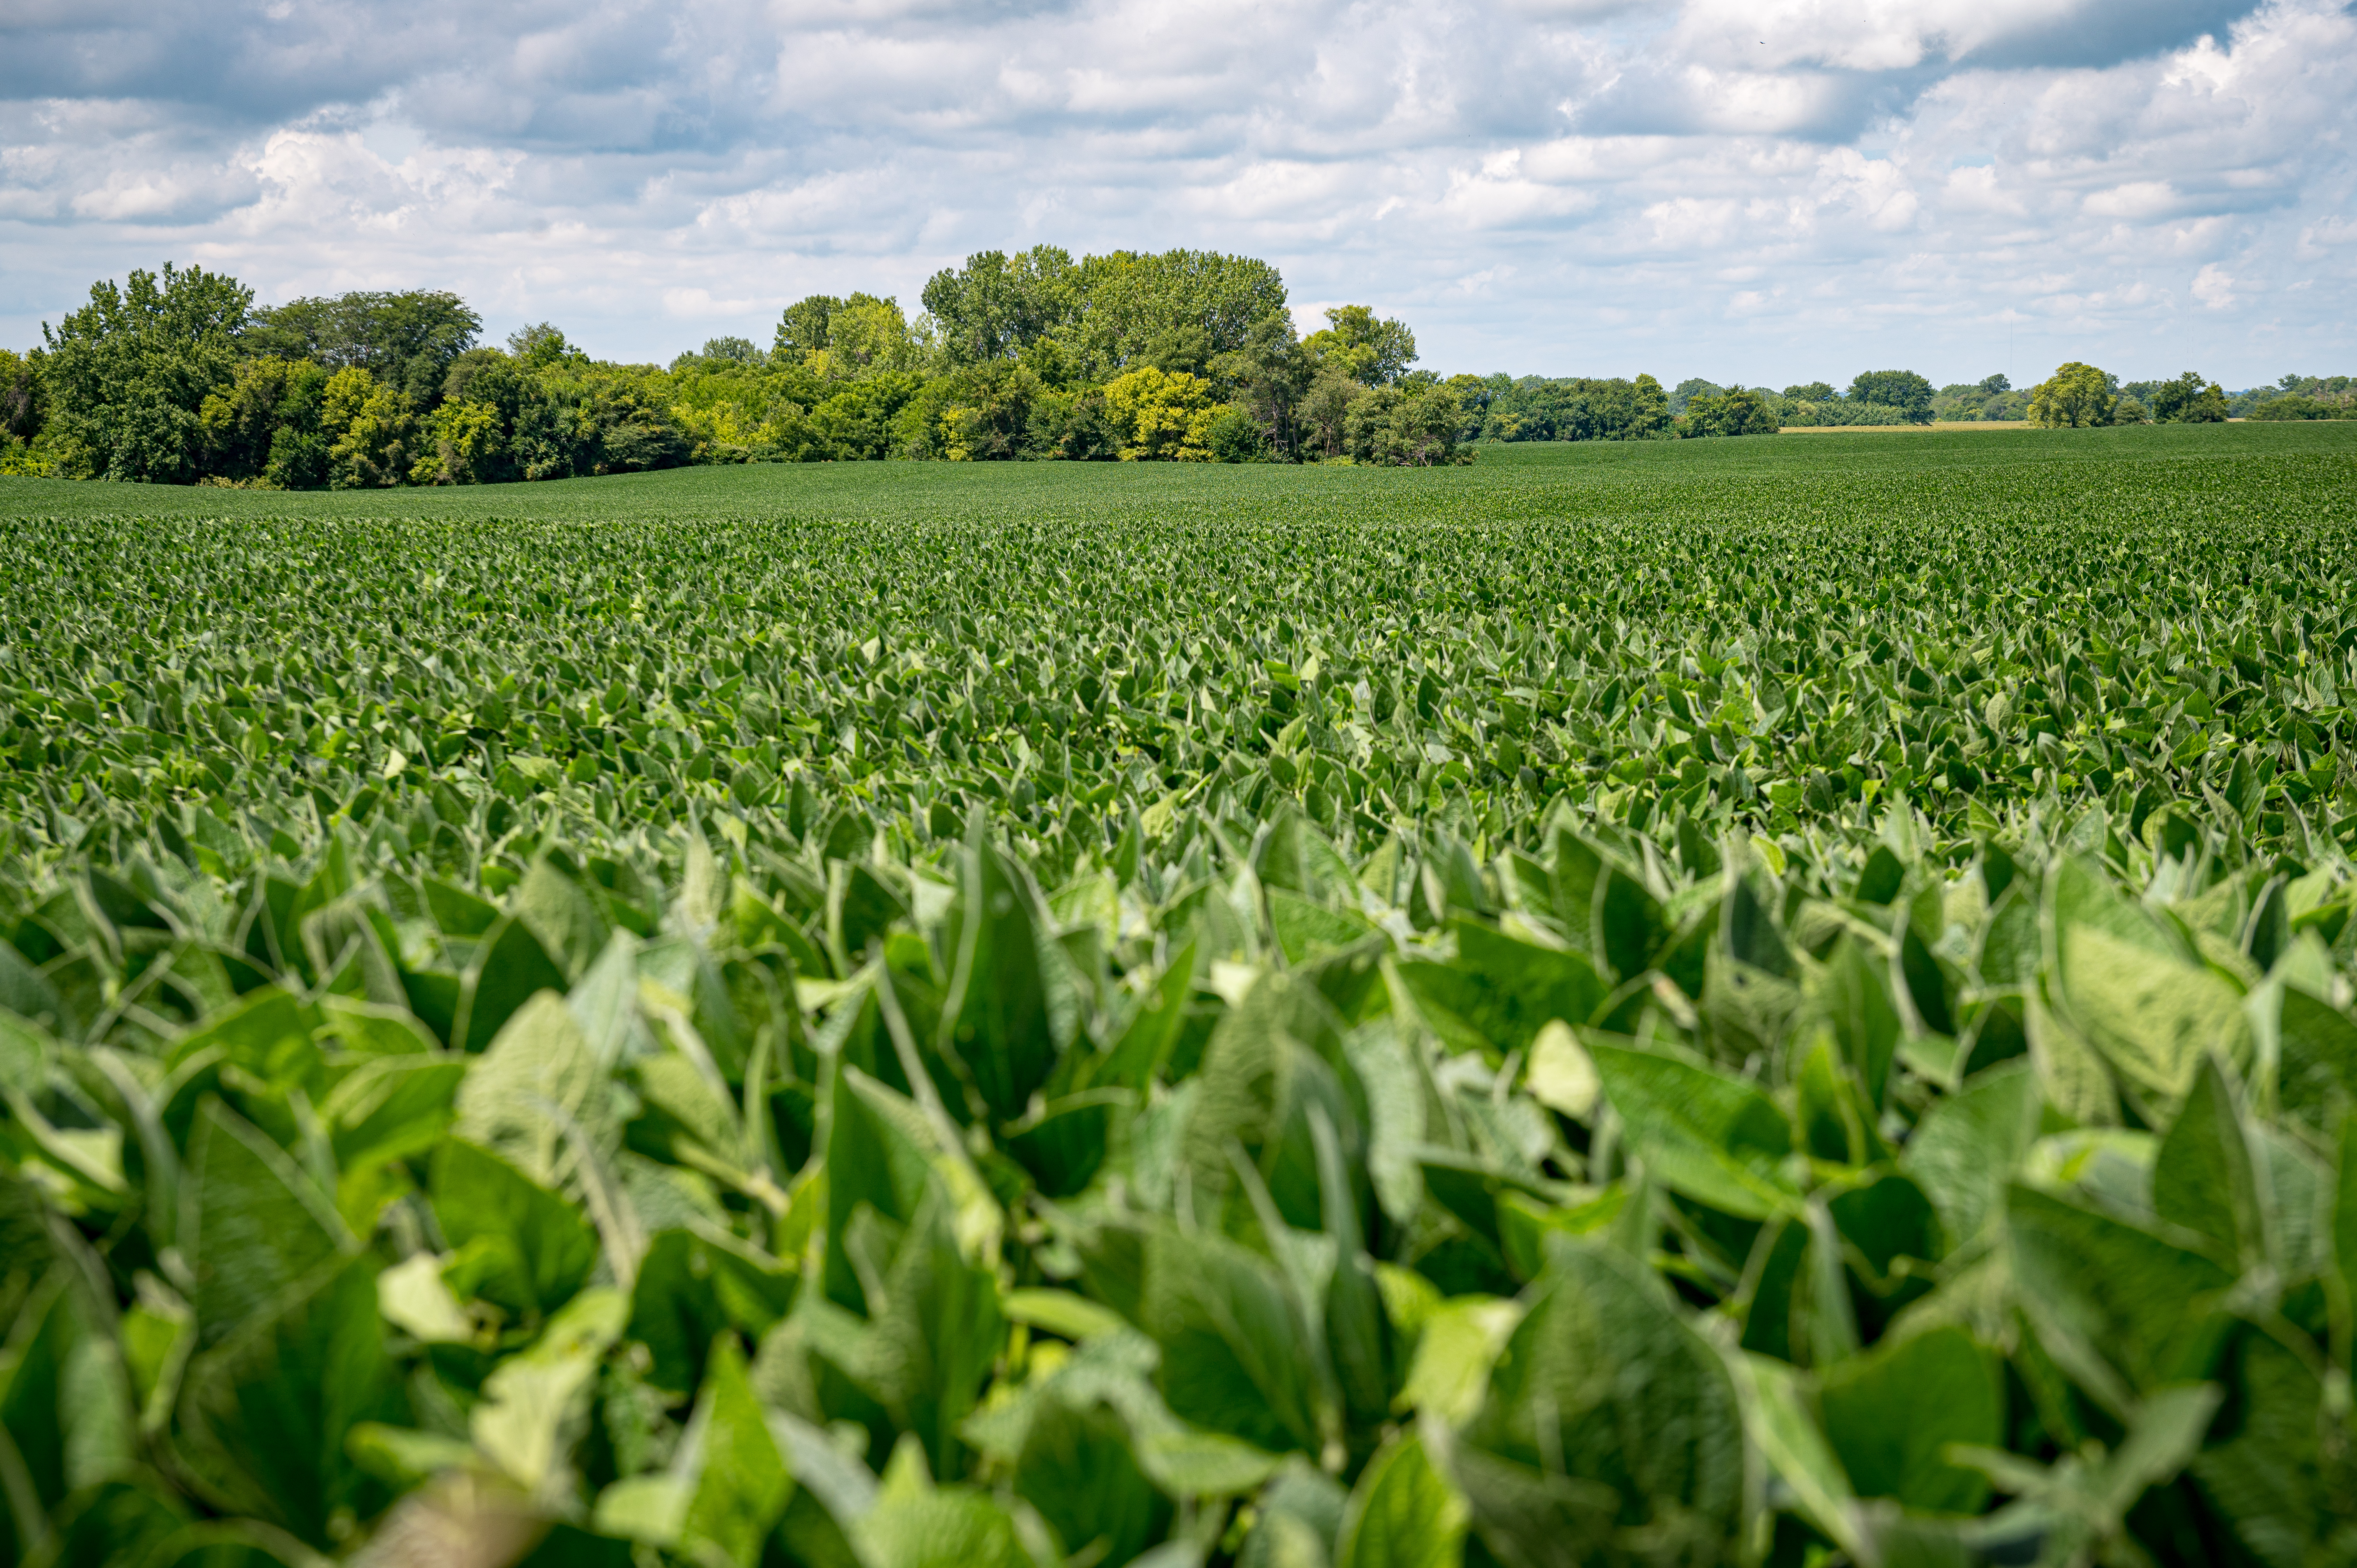 A green soybean field against a blue sky